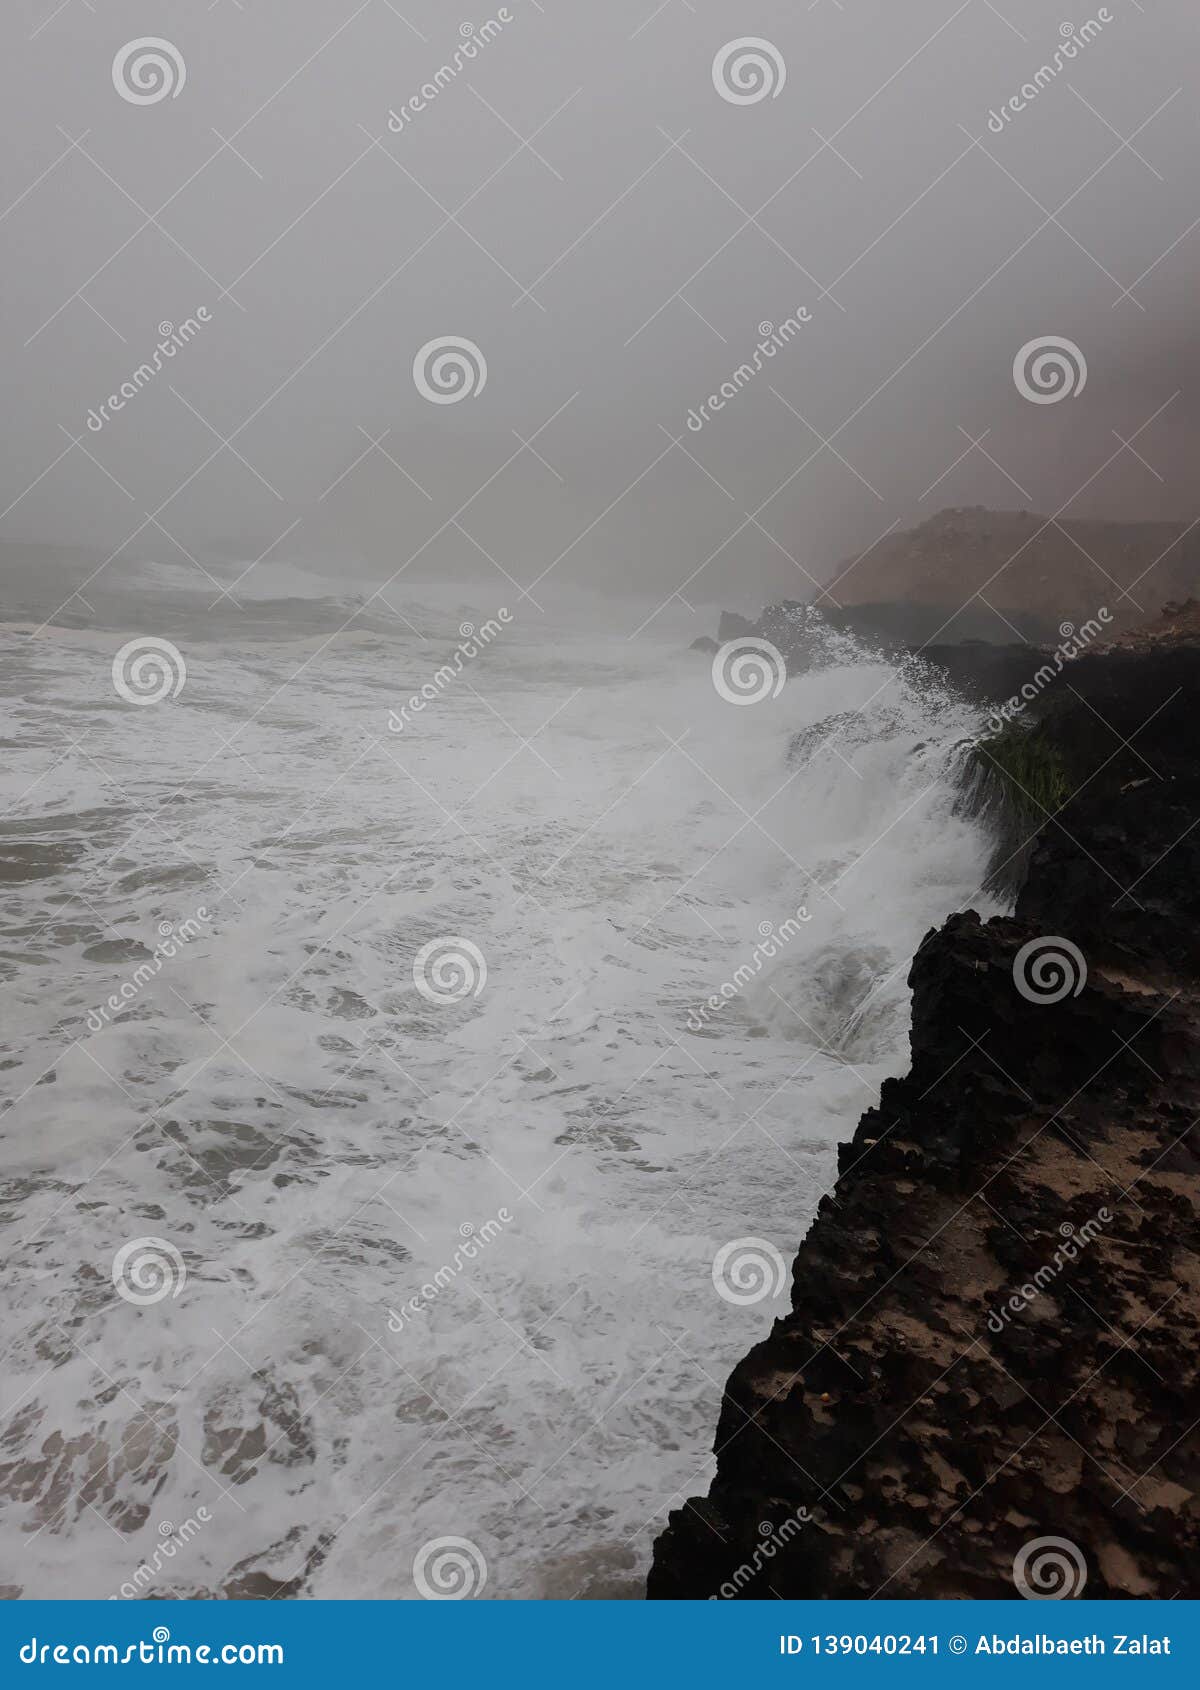 waves of salala sea during krif season